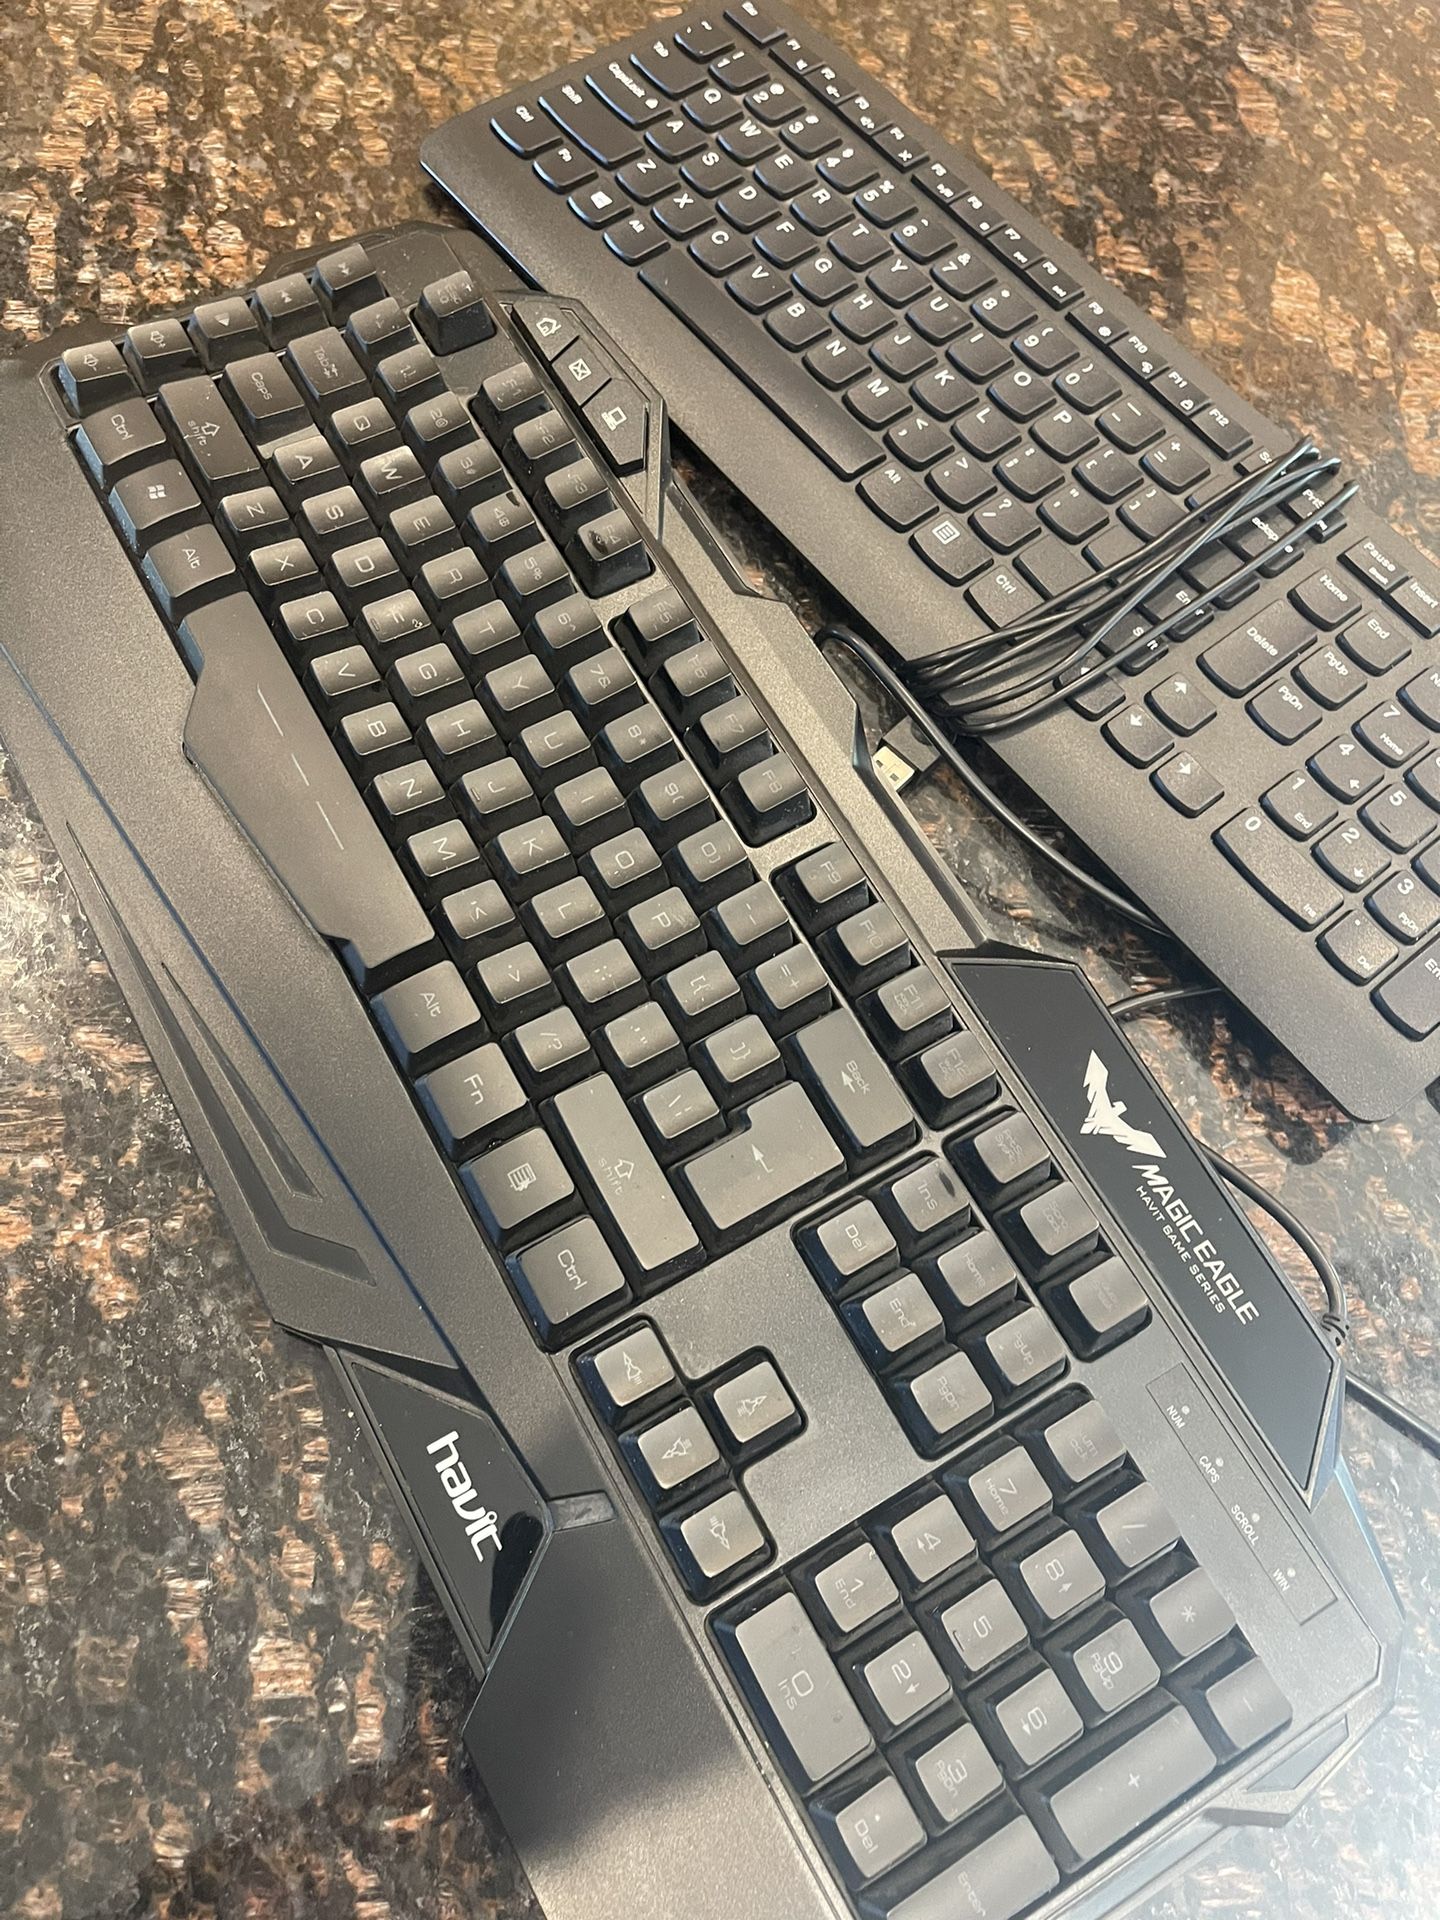 Gaming and Regular keyboard